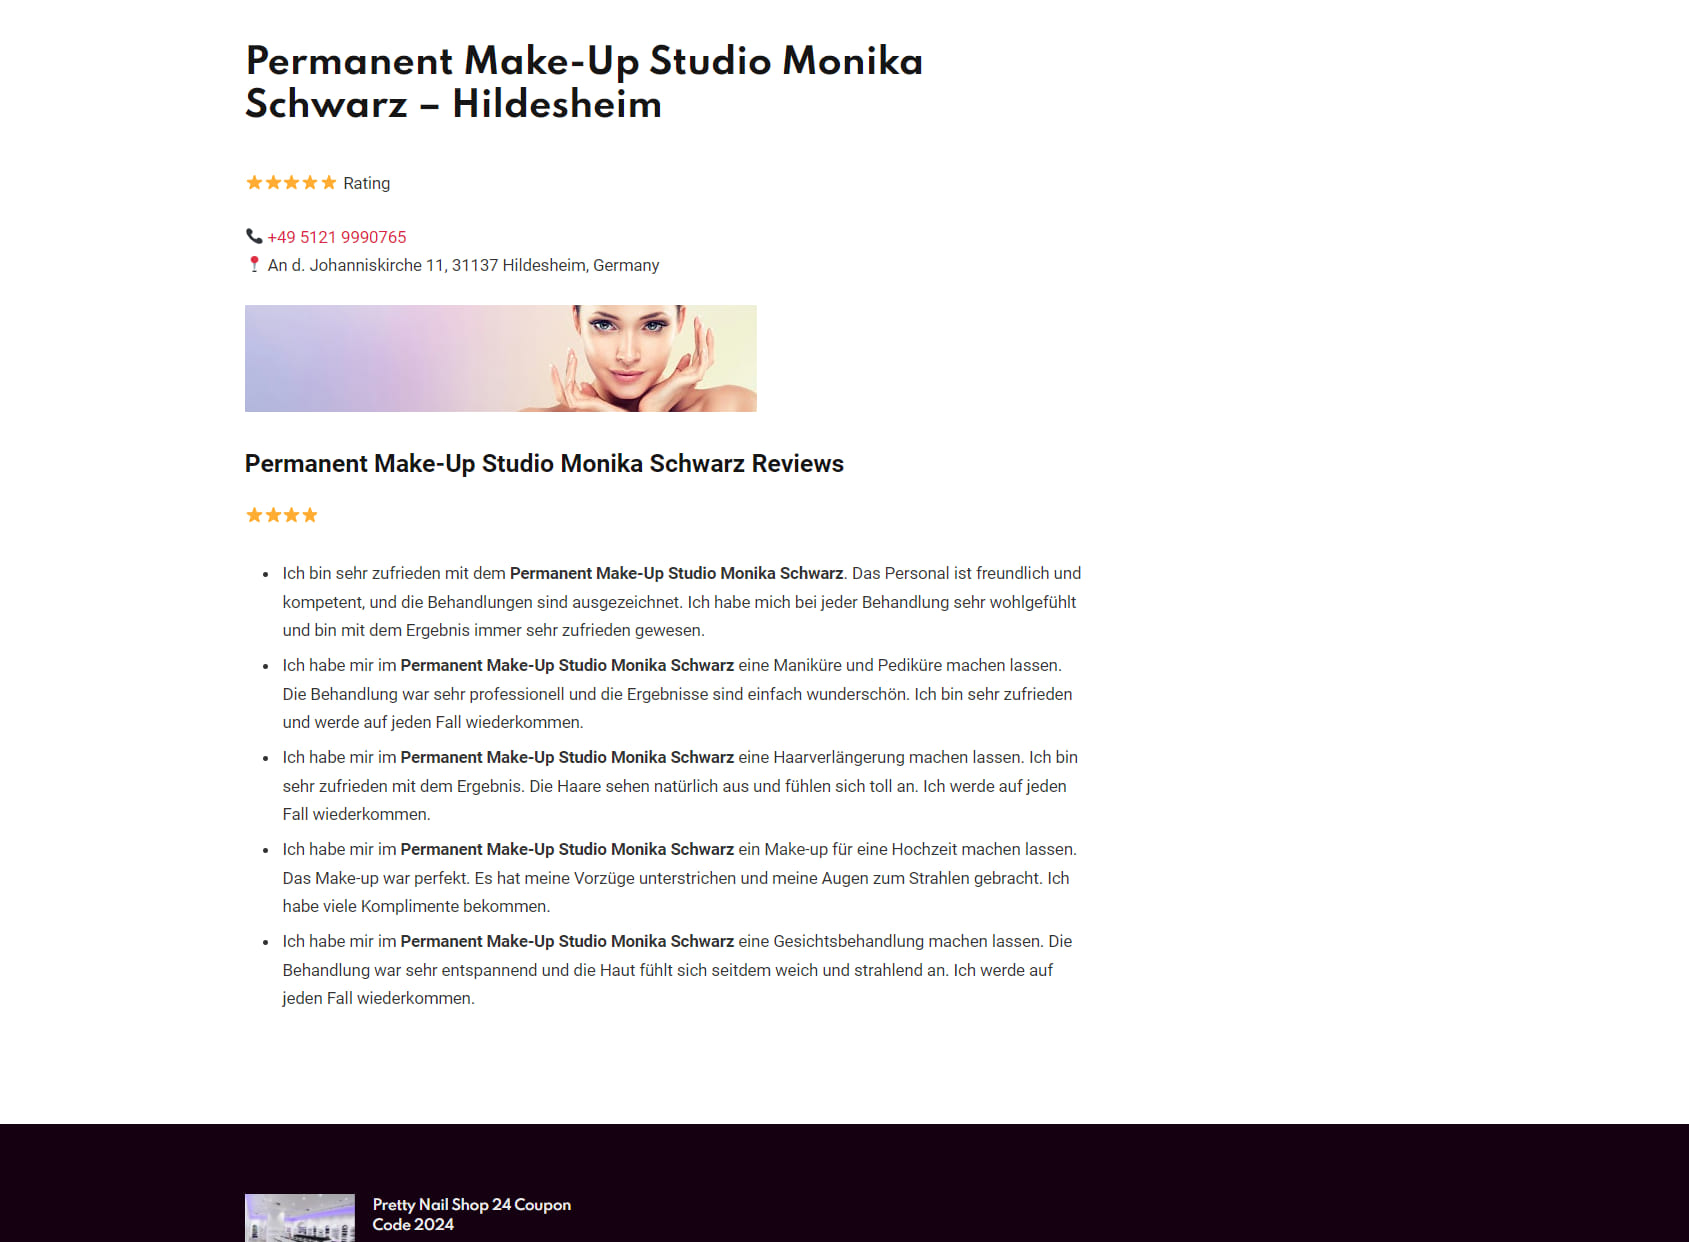 Permanent Make-Up Studio Monika Schwarz - Hildesheim